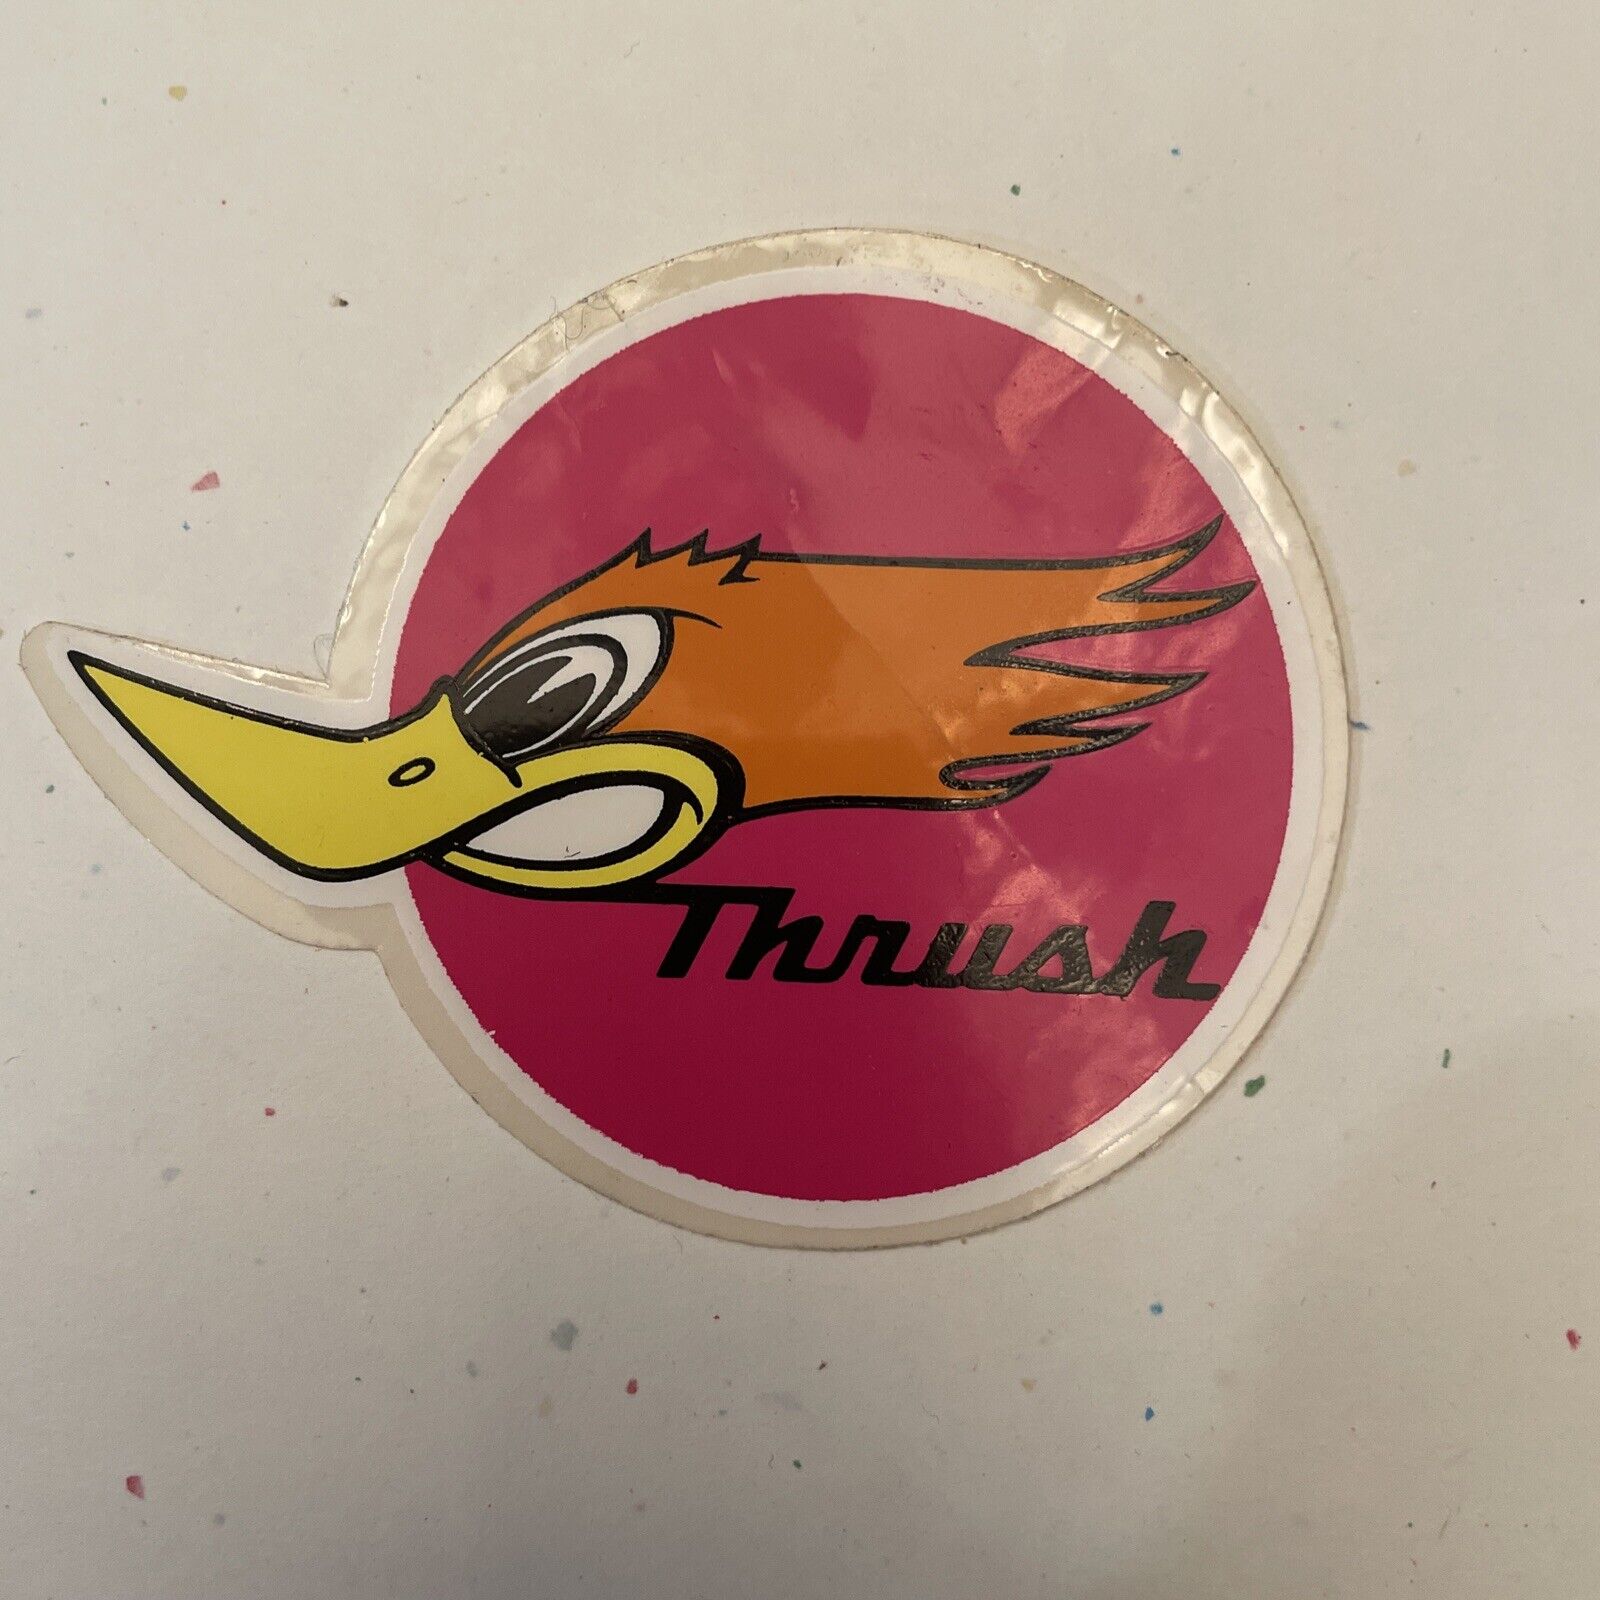 THRUSH Glasspack Mufflers - Original Vintage 1960\'s 70\'s Racing Decal/Sticker  